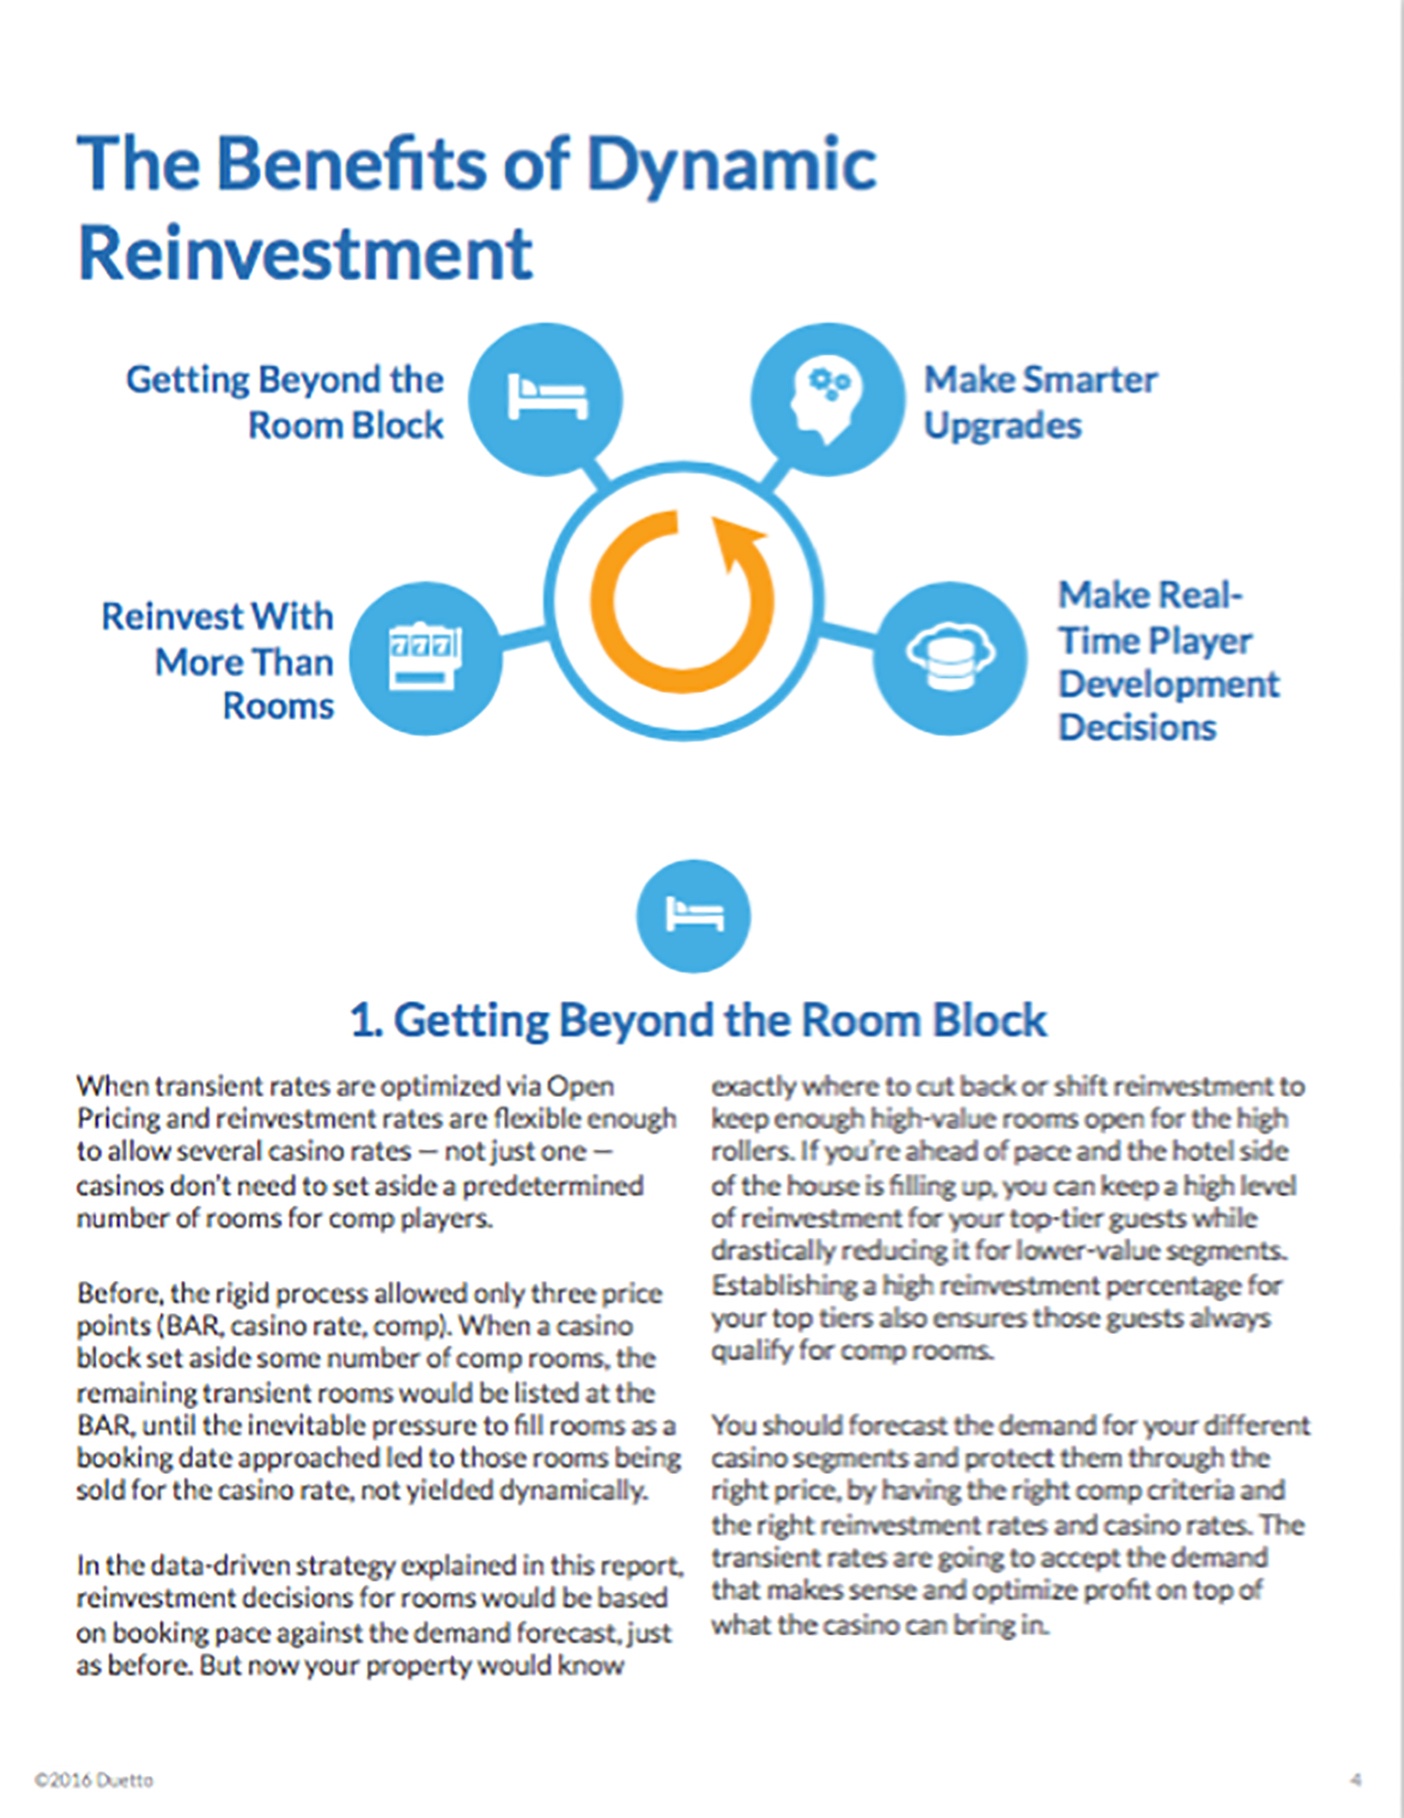 WP 4 Ways Dynamic Reinvestment 4.jpg